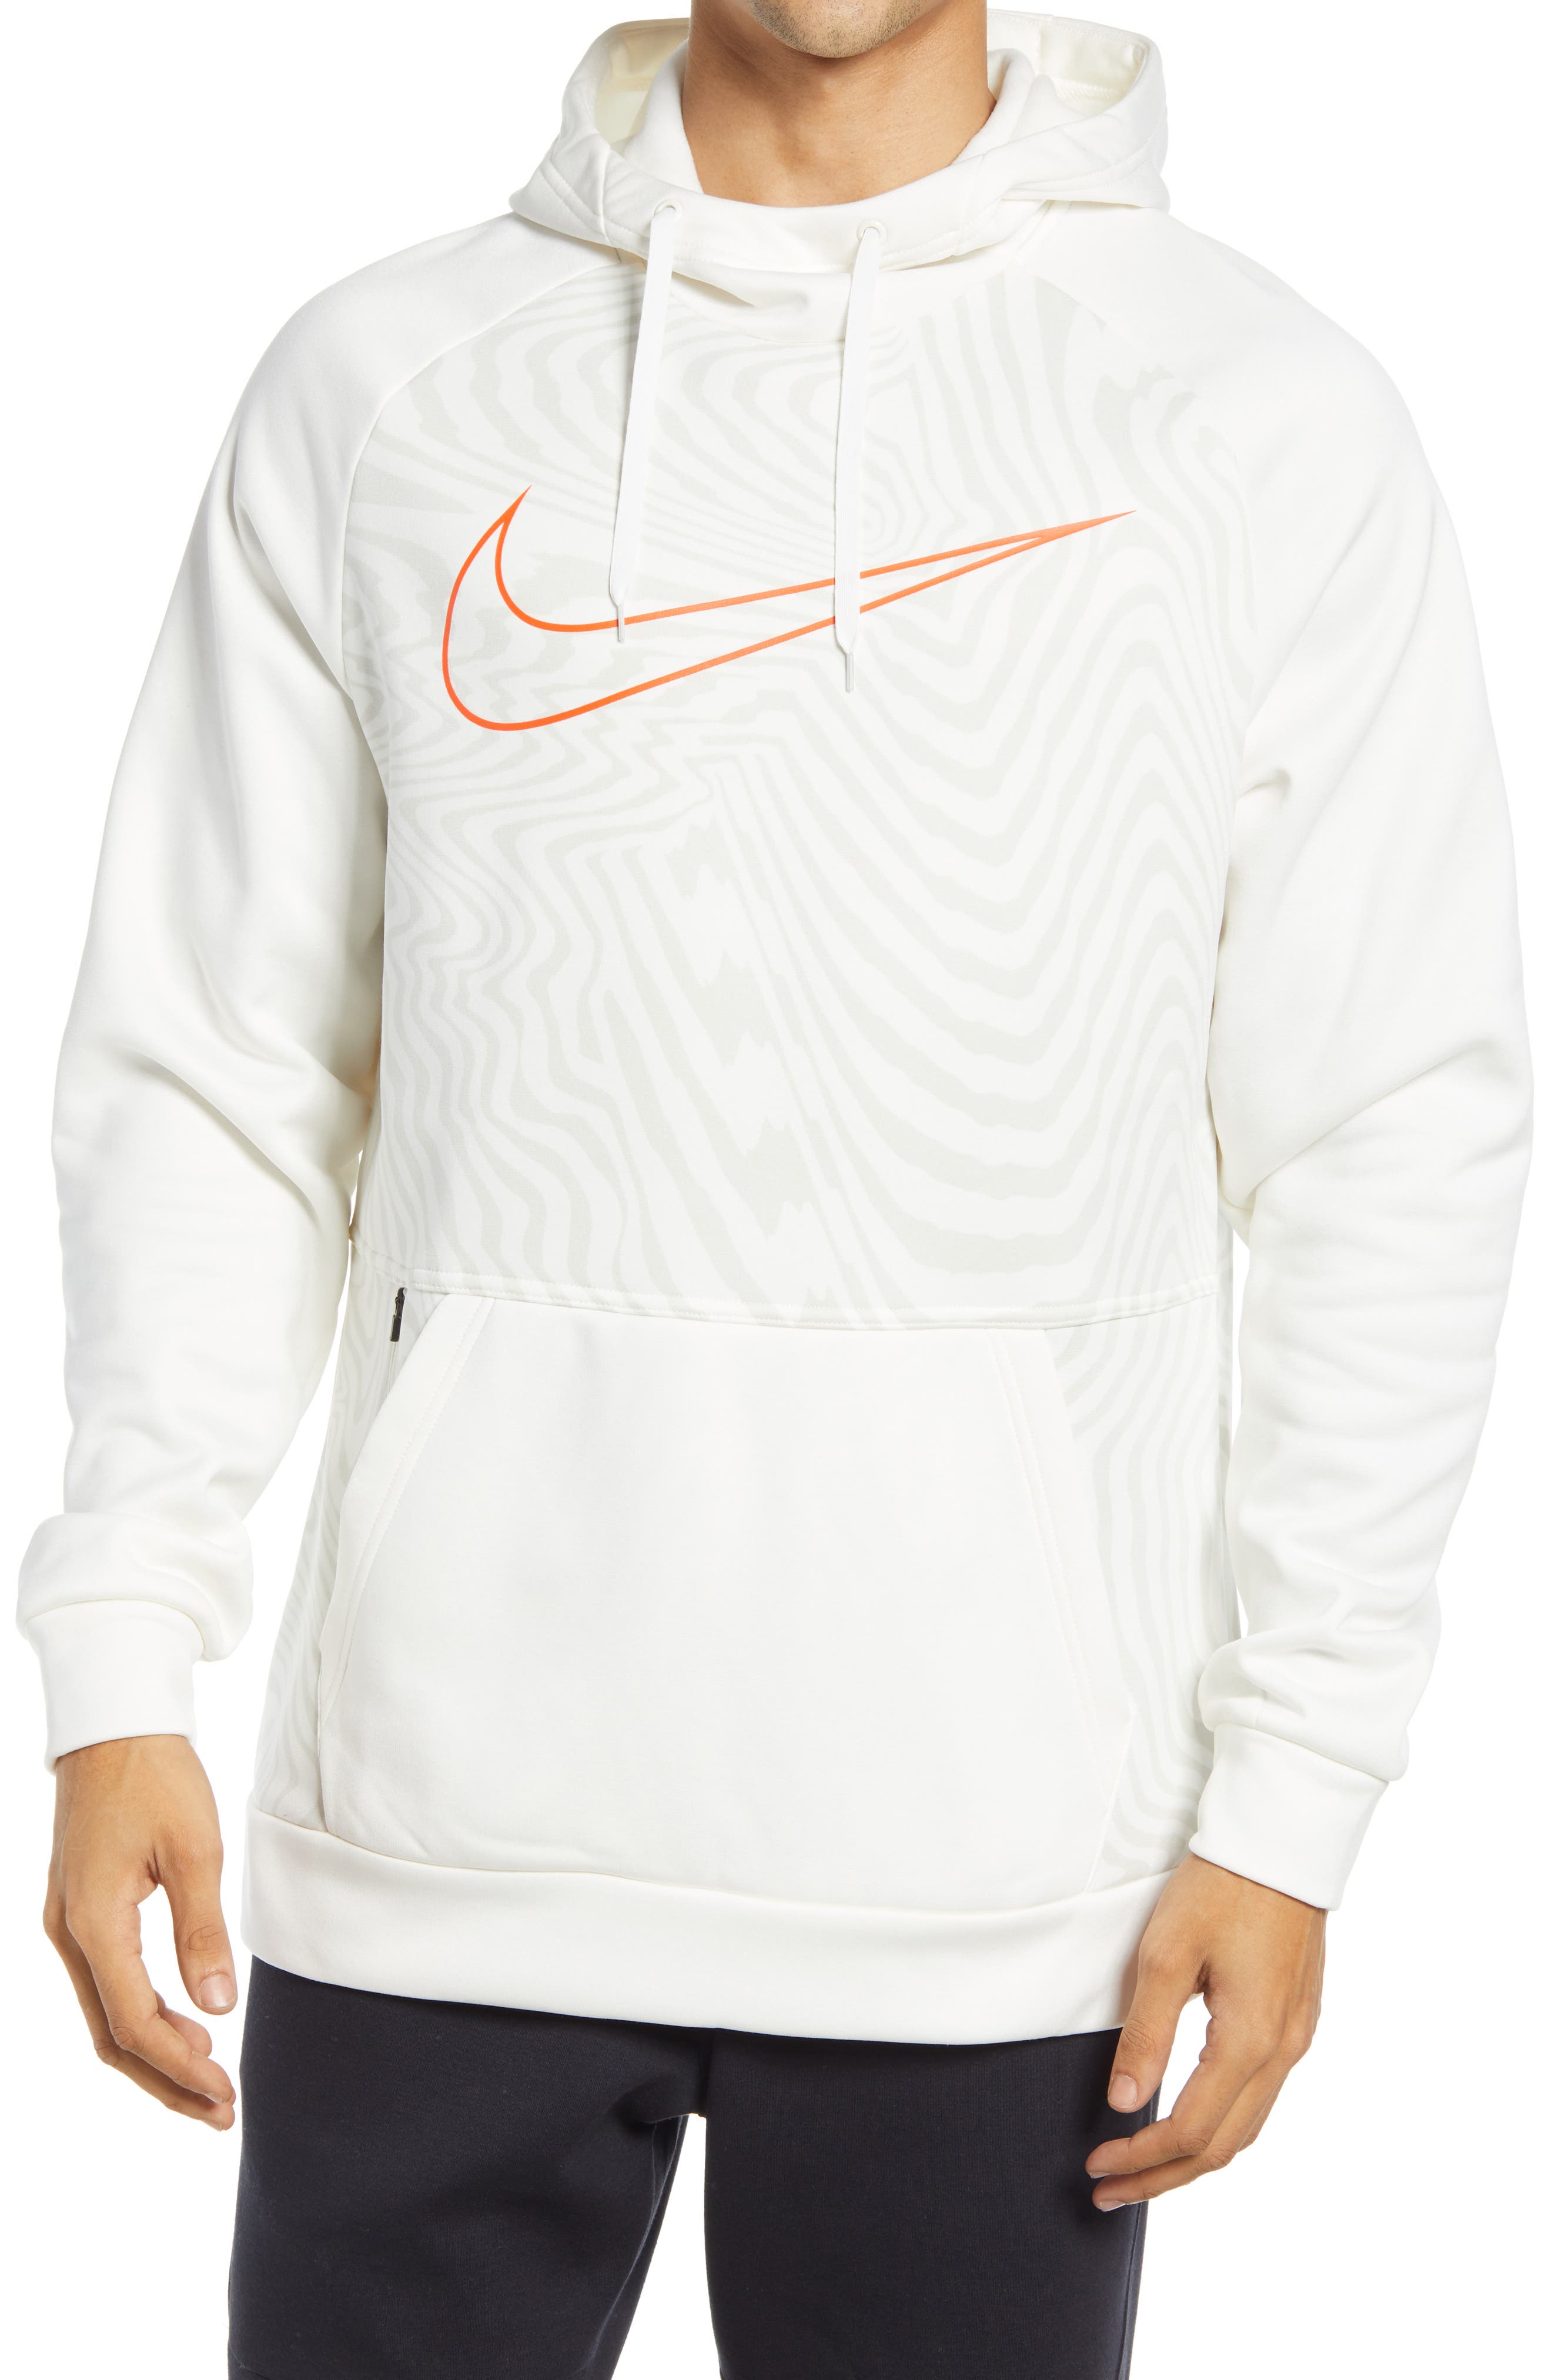 Nike Sale Workout Clothes \u0026 Activewear 